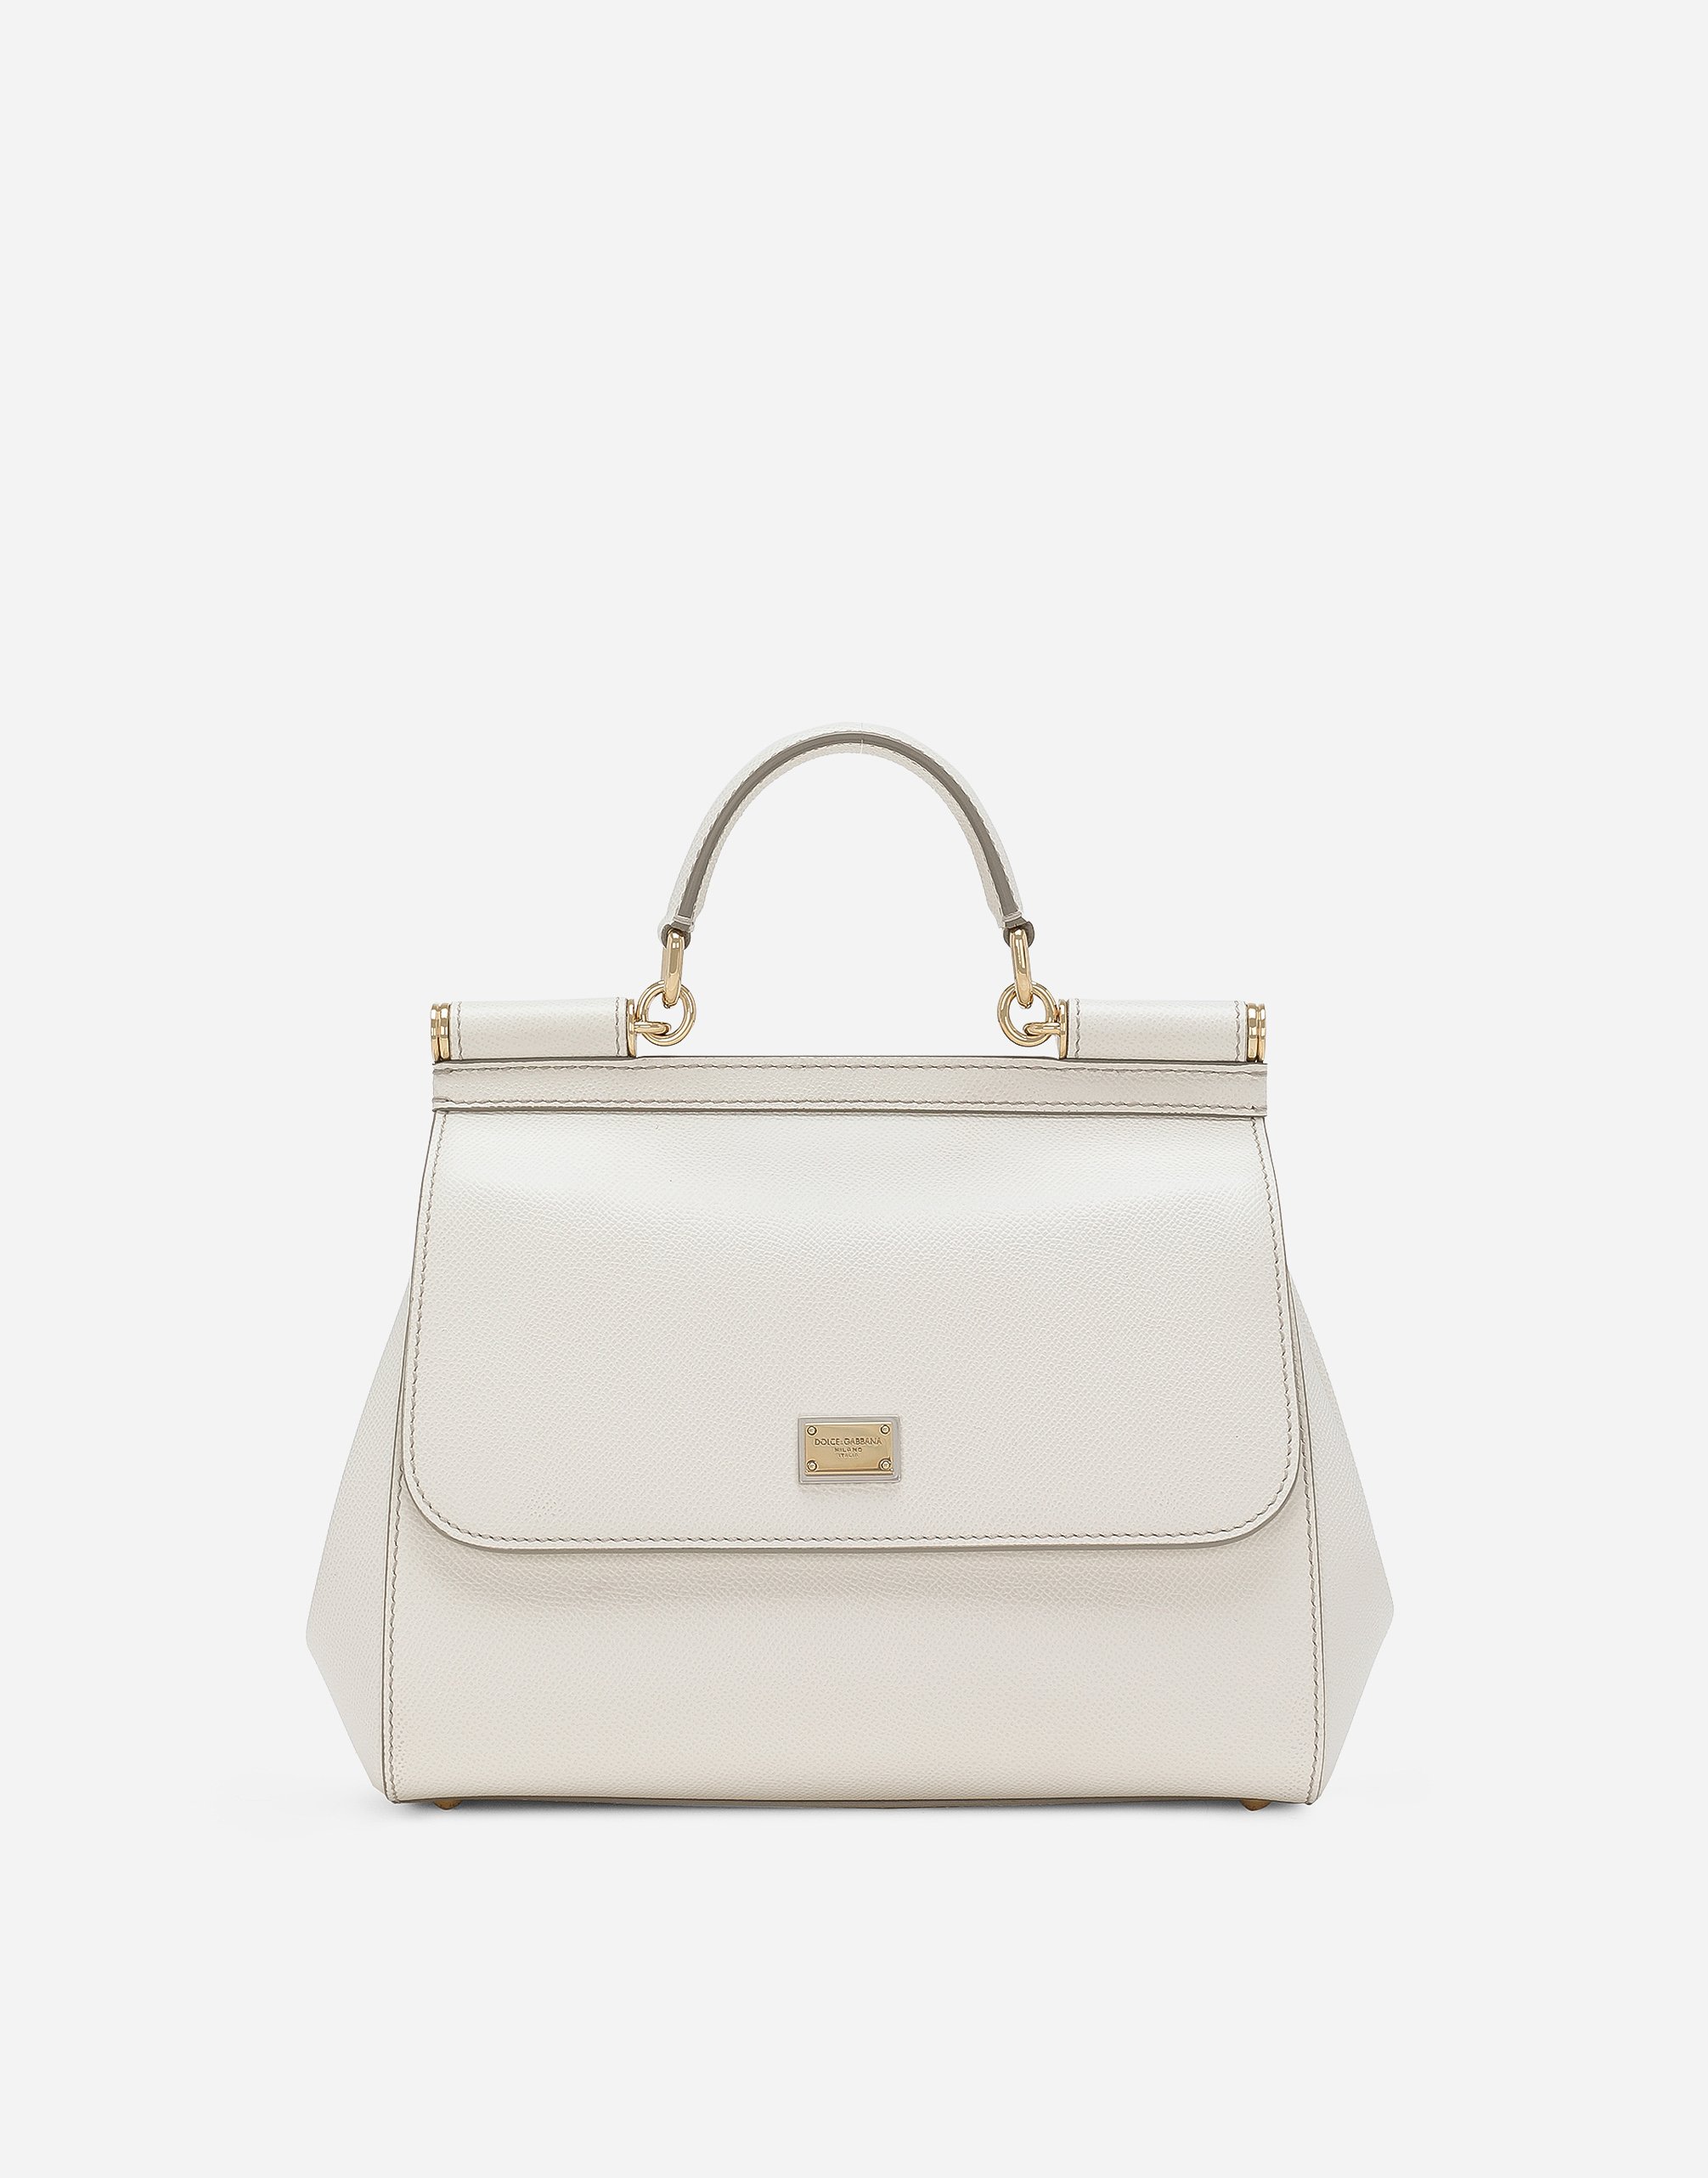 Medium Sicily handbag in dauphine leather in White for Women 